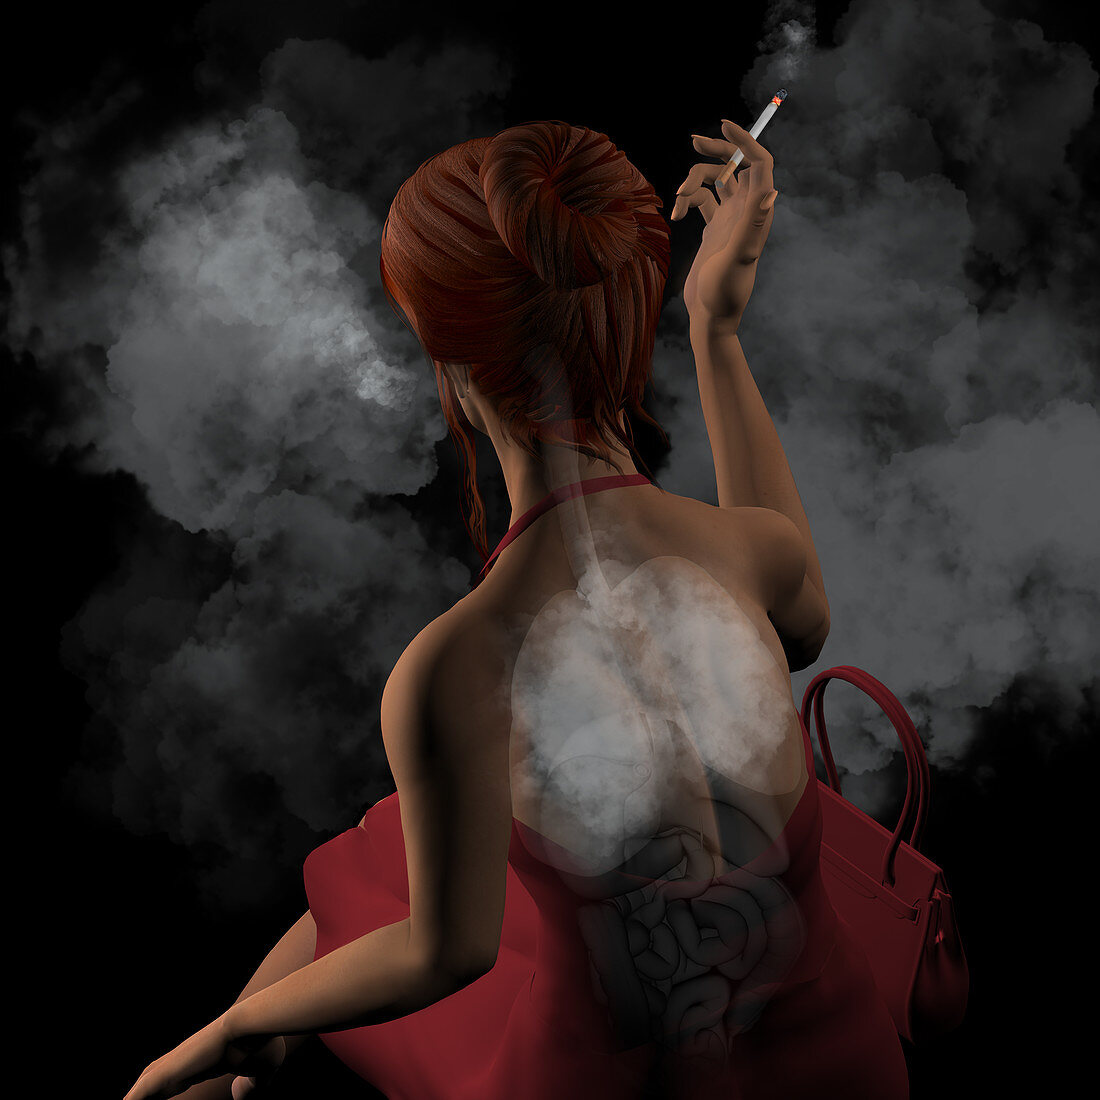 Woman smoking cigarettes, illustration